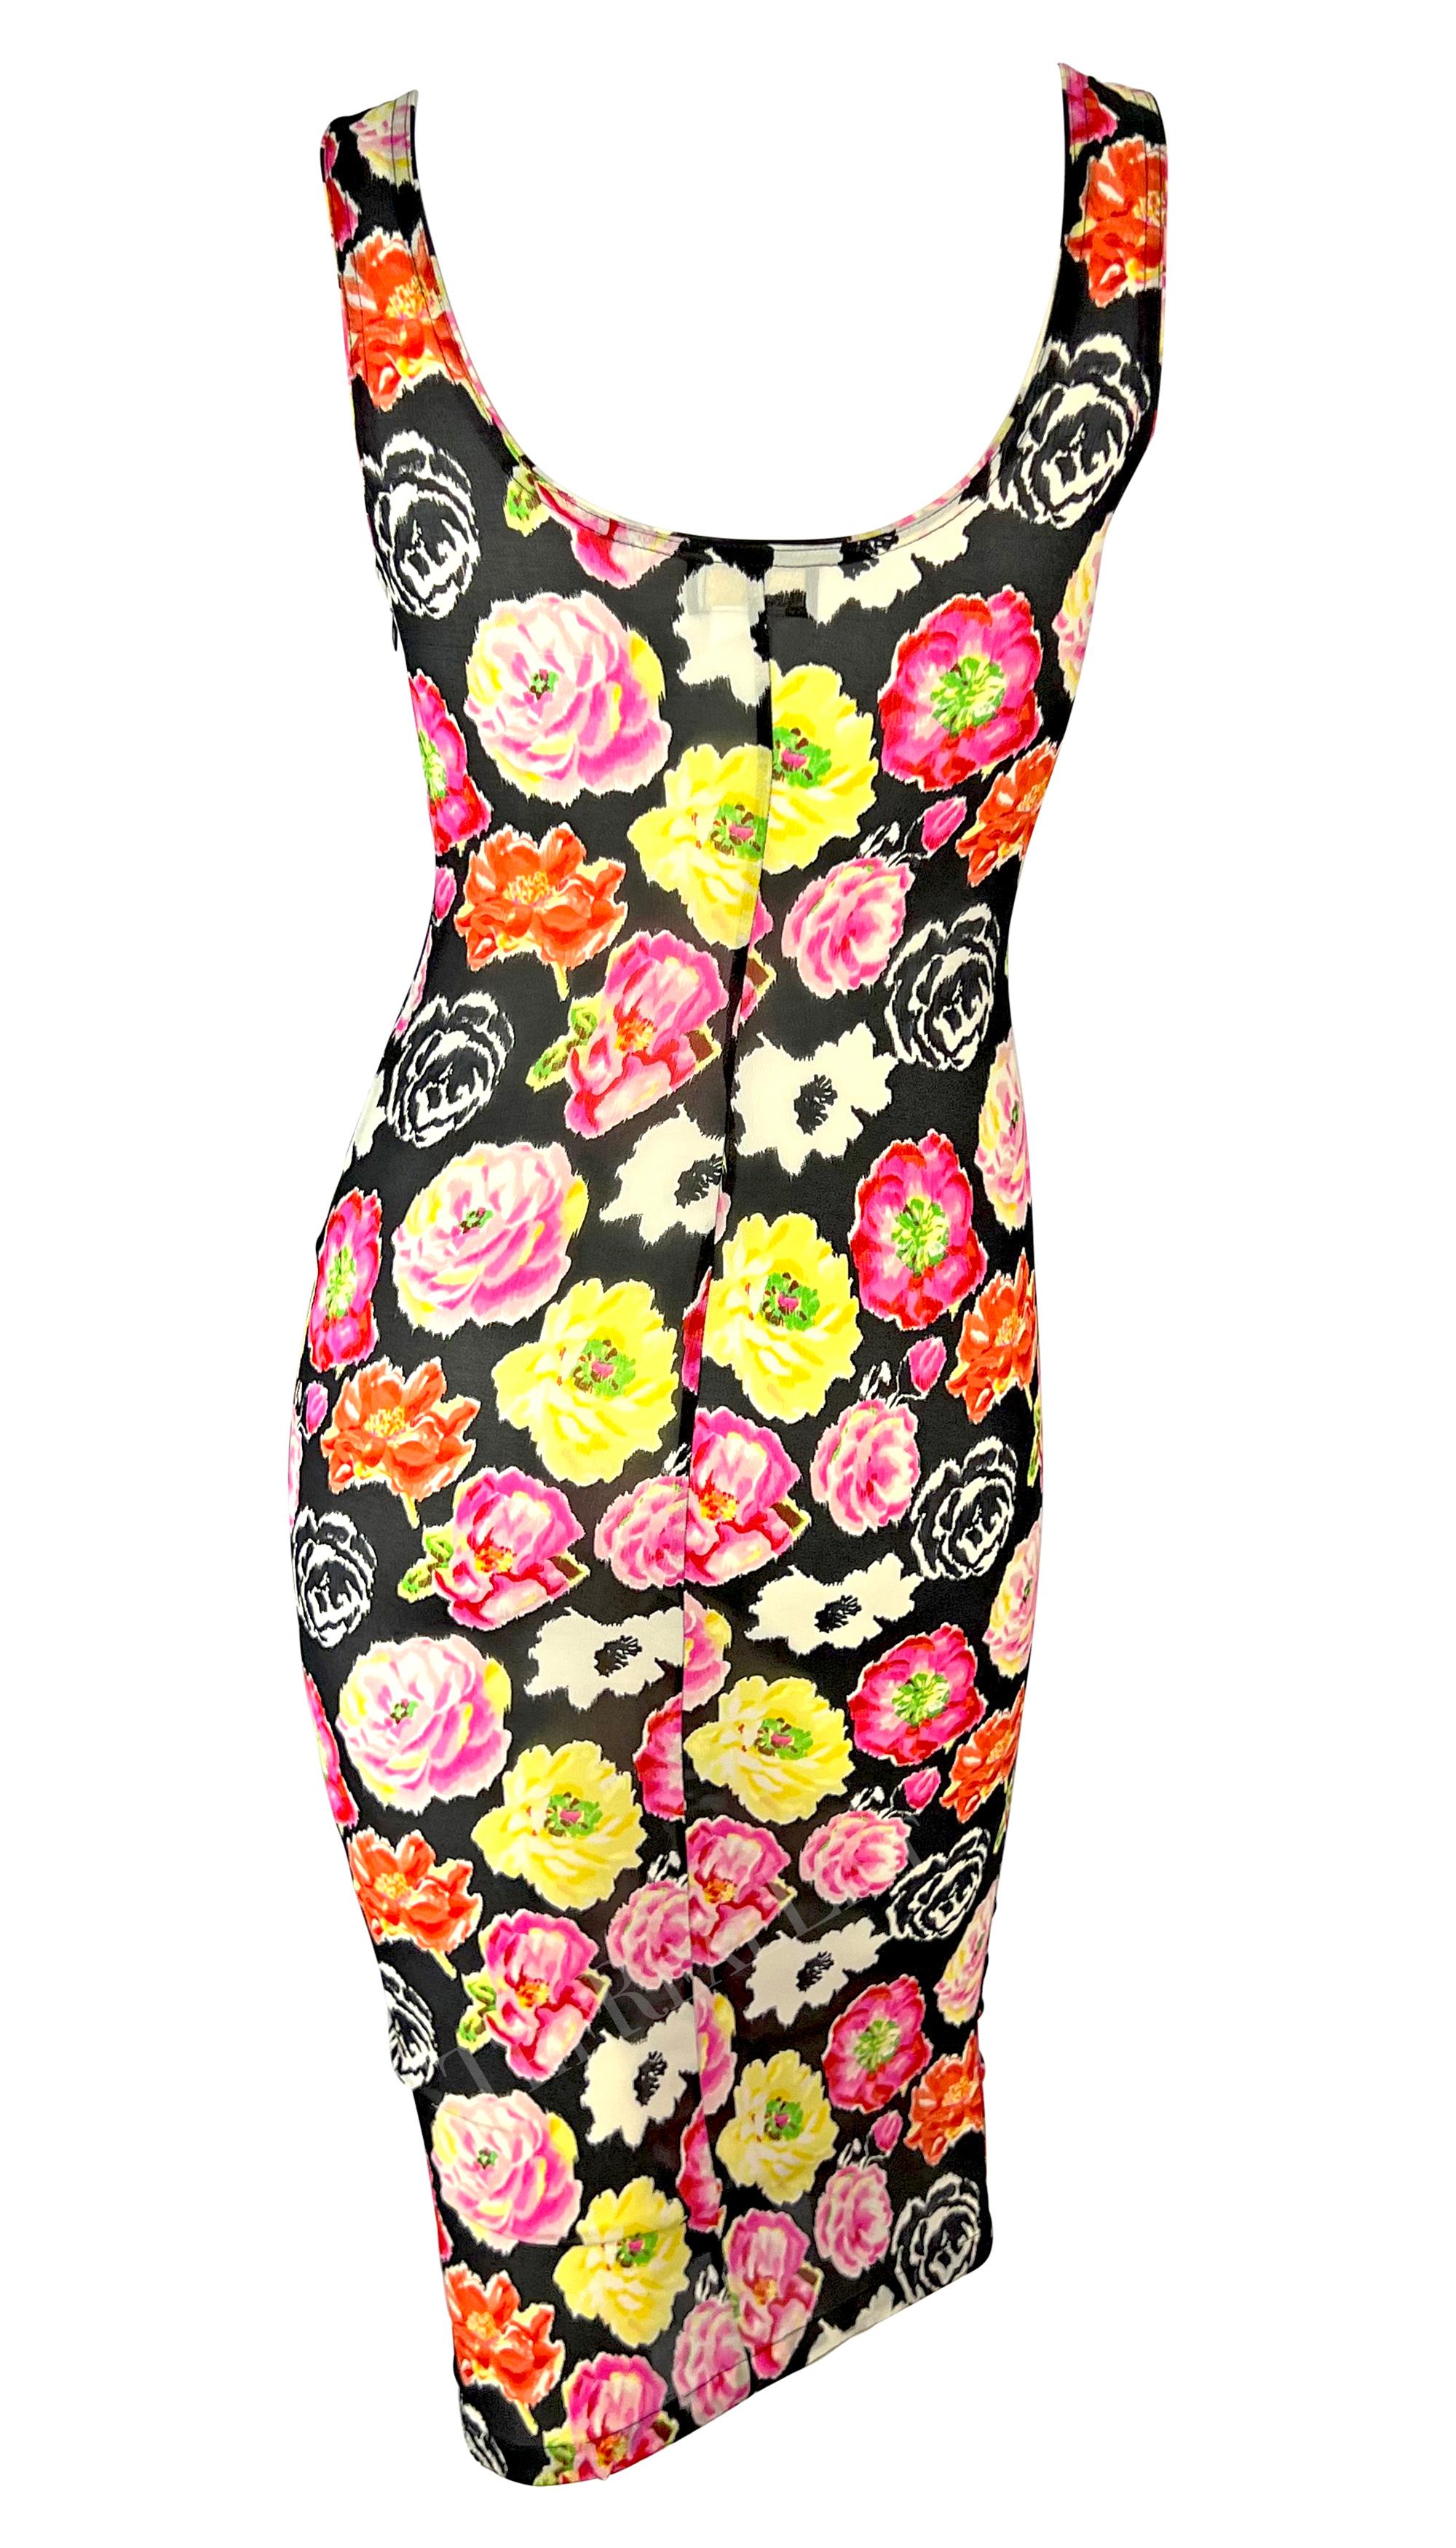 S/S 1995 Gianni Versace Runway Floral Print Semi-Sheer Slip Wiggle Dress For Sale 3